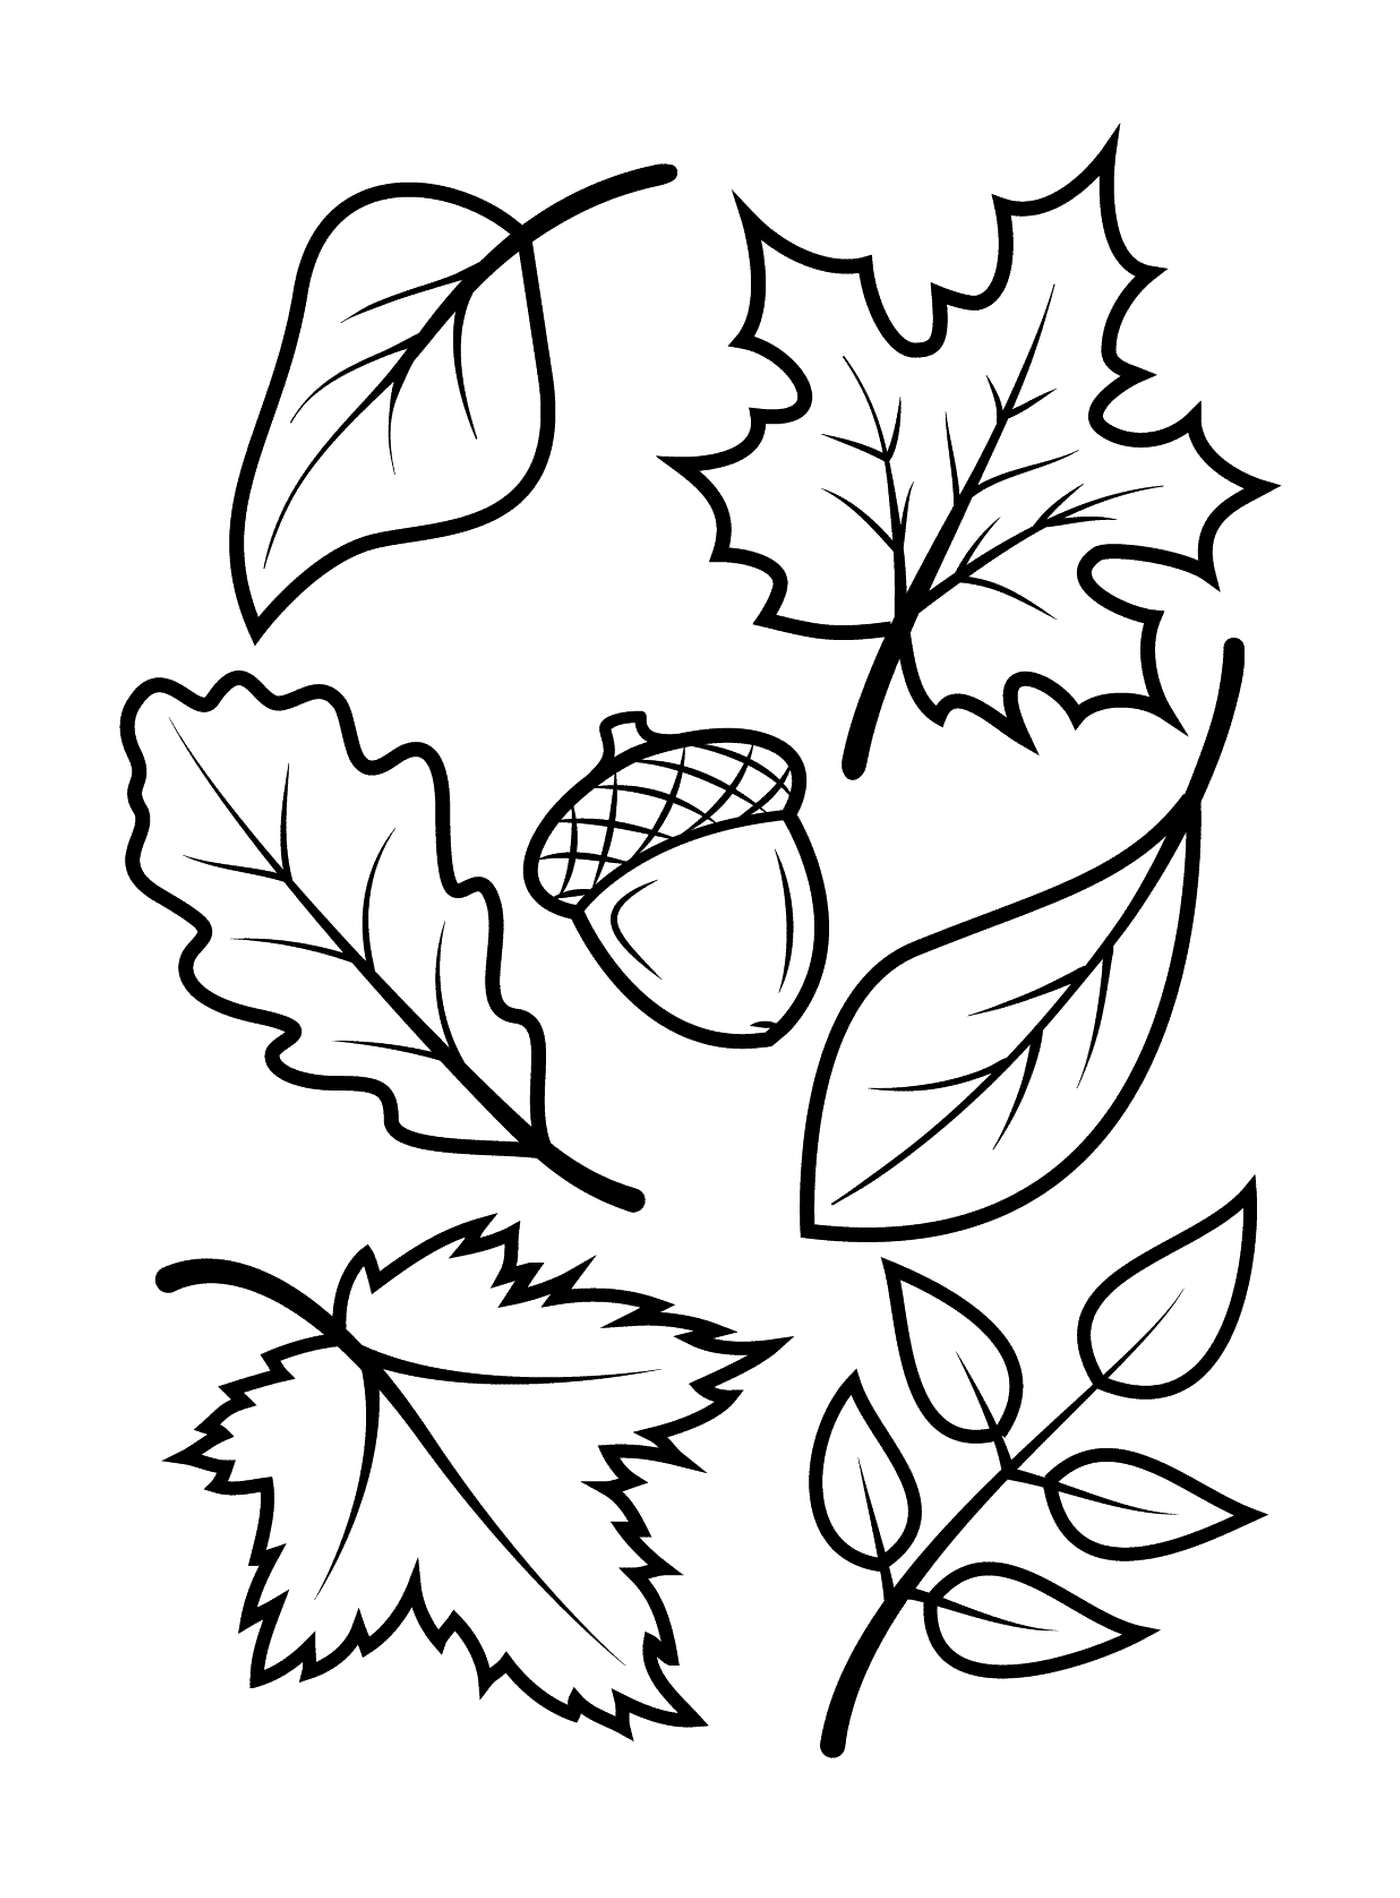  Leaves and acorns 